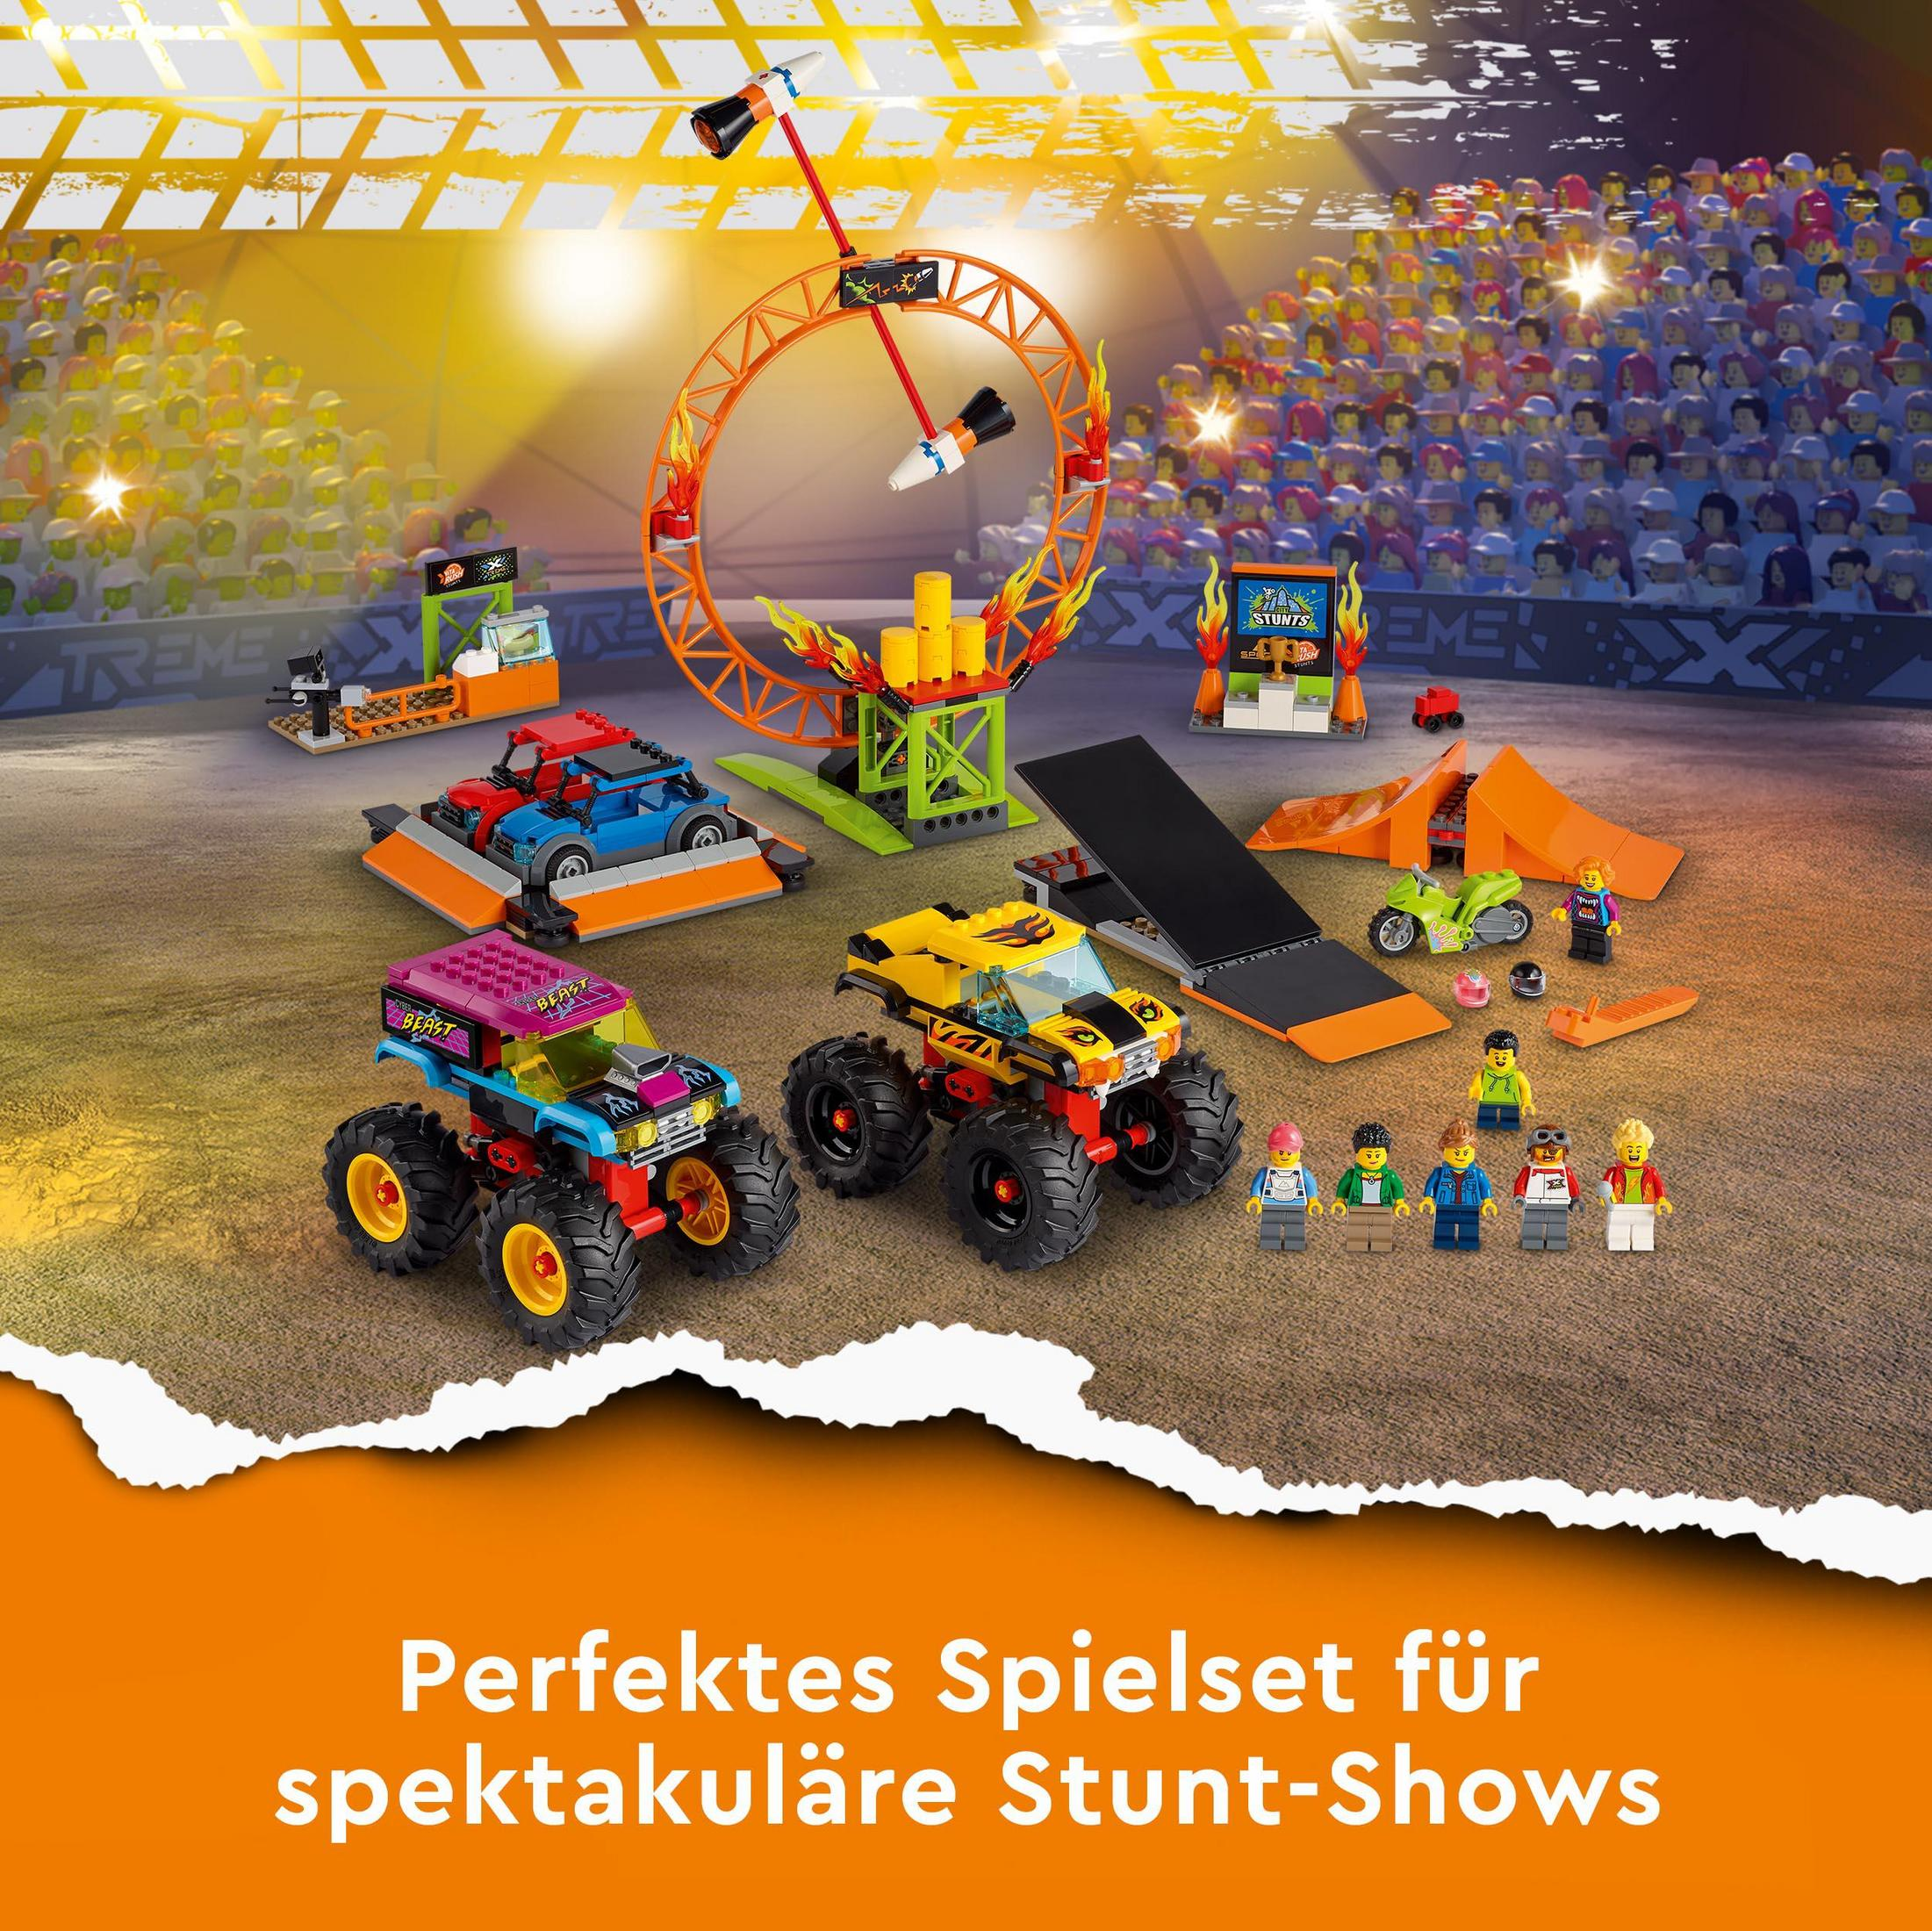 LEGO 60295 City Stuntshow-Arena Bausatz